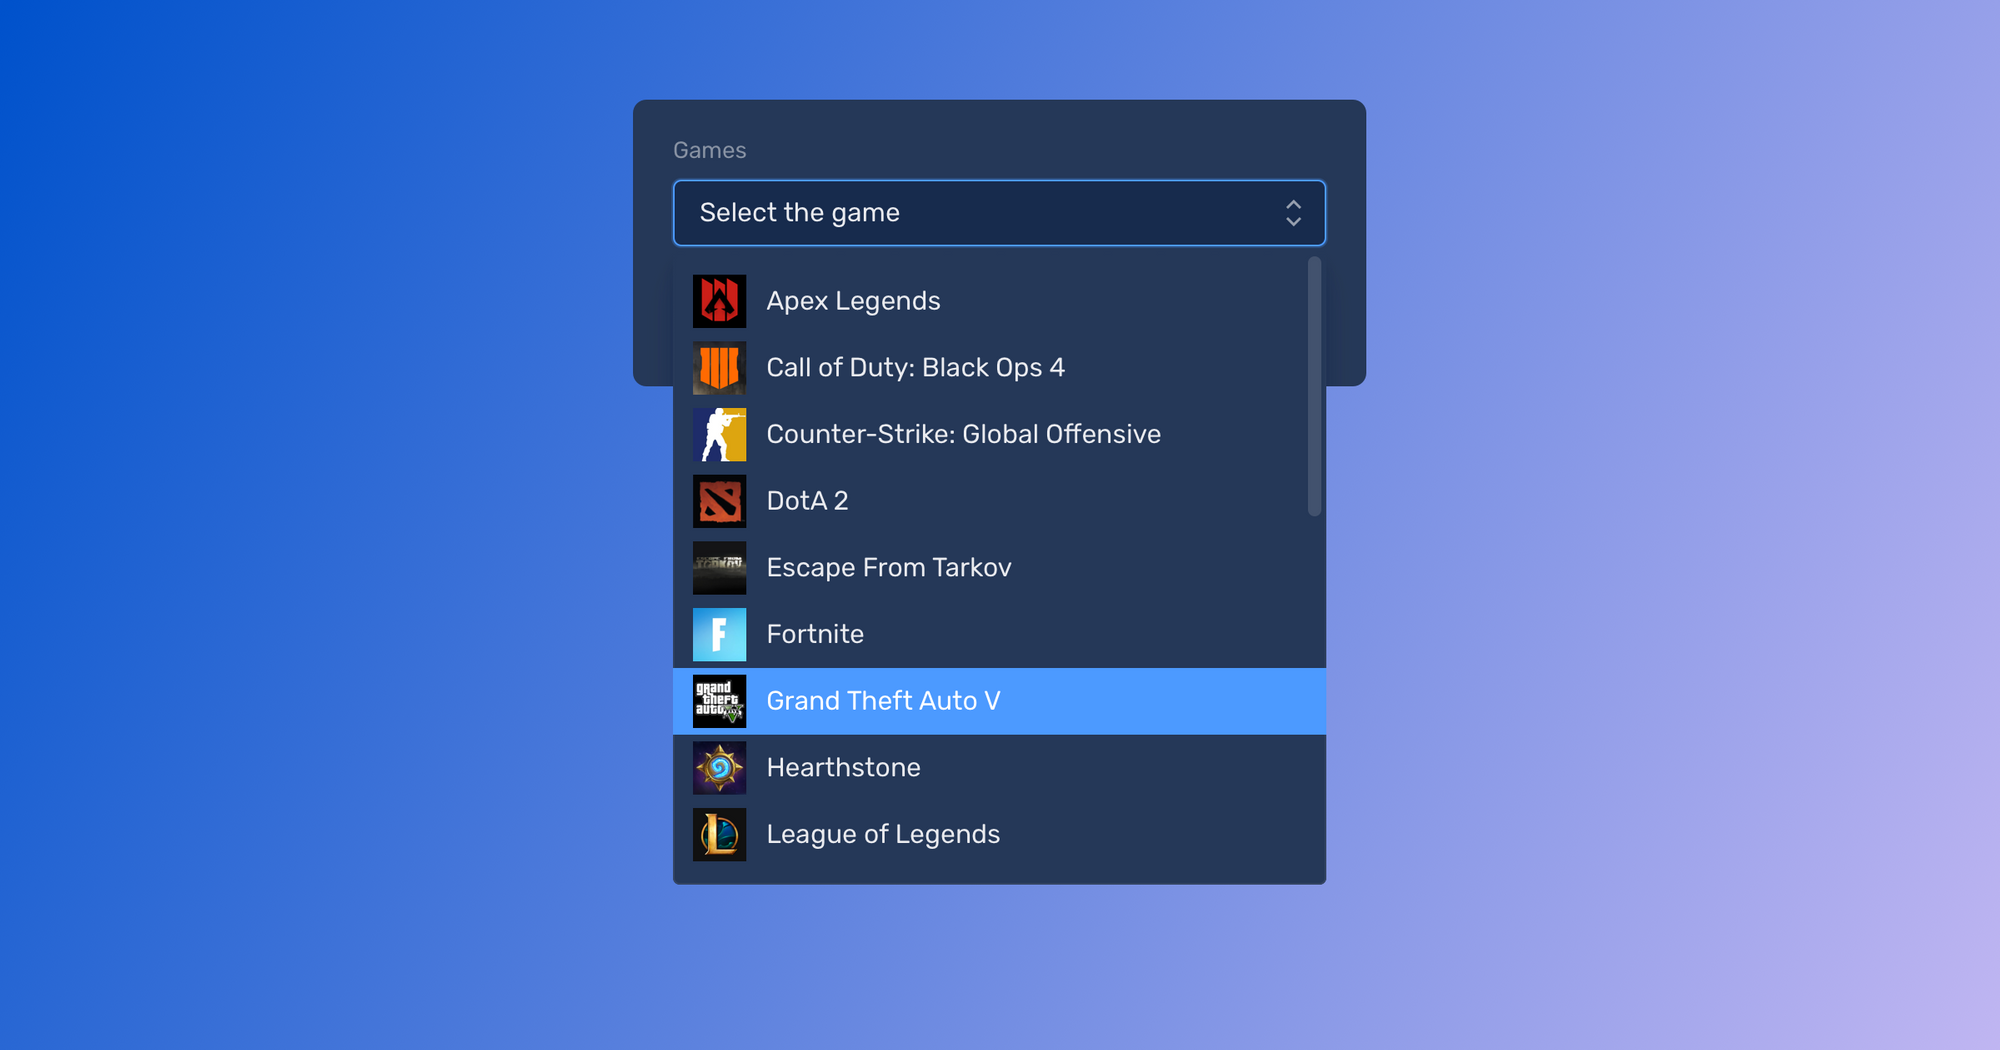 Multi-platform games updates on titles page